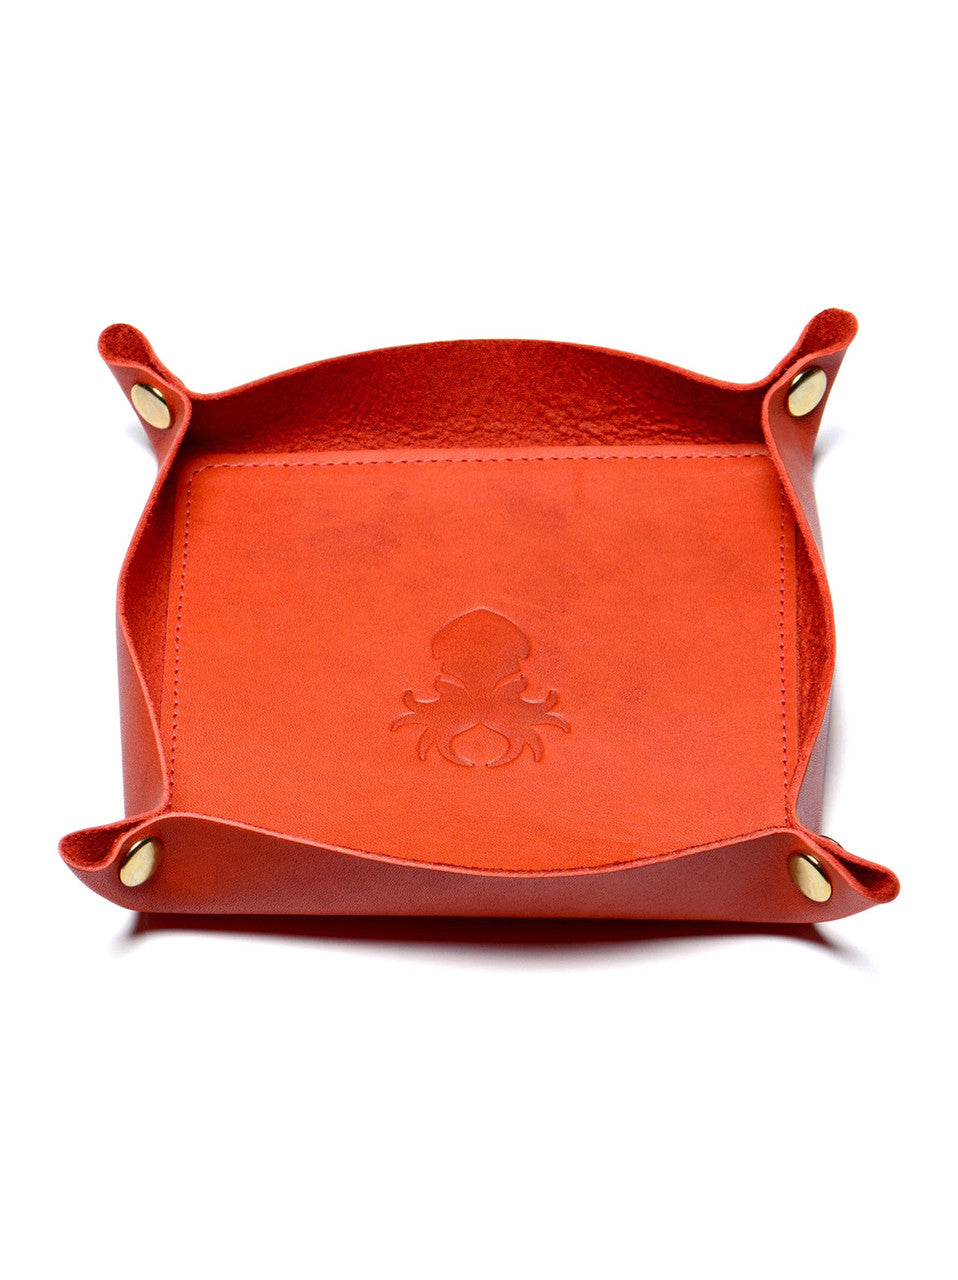 Leather Dice Tray In Blood Orange – Kraken Dice